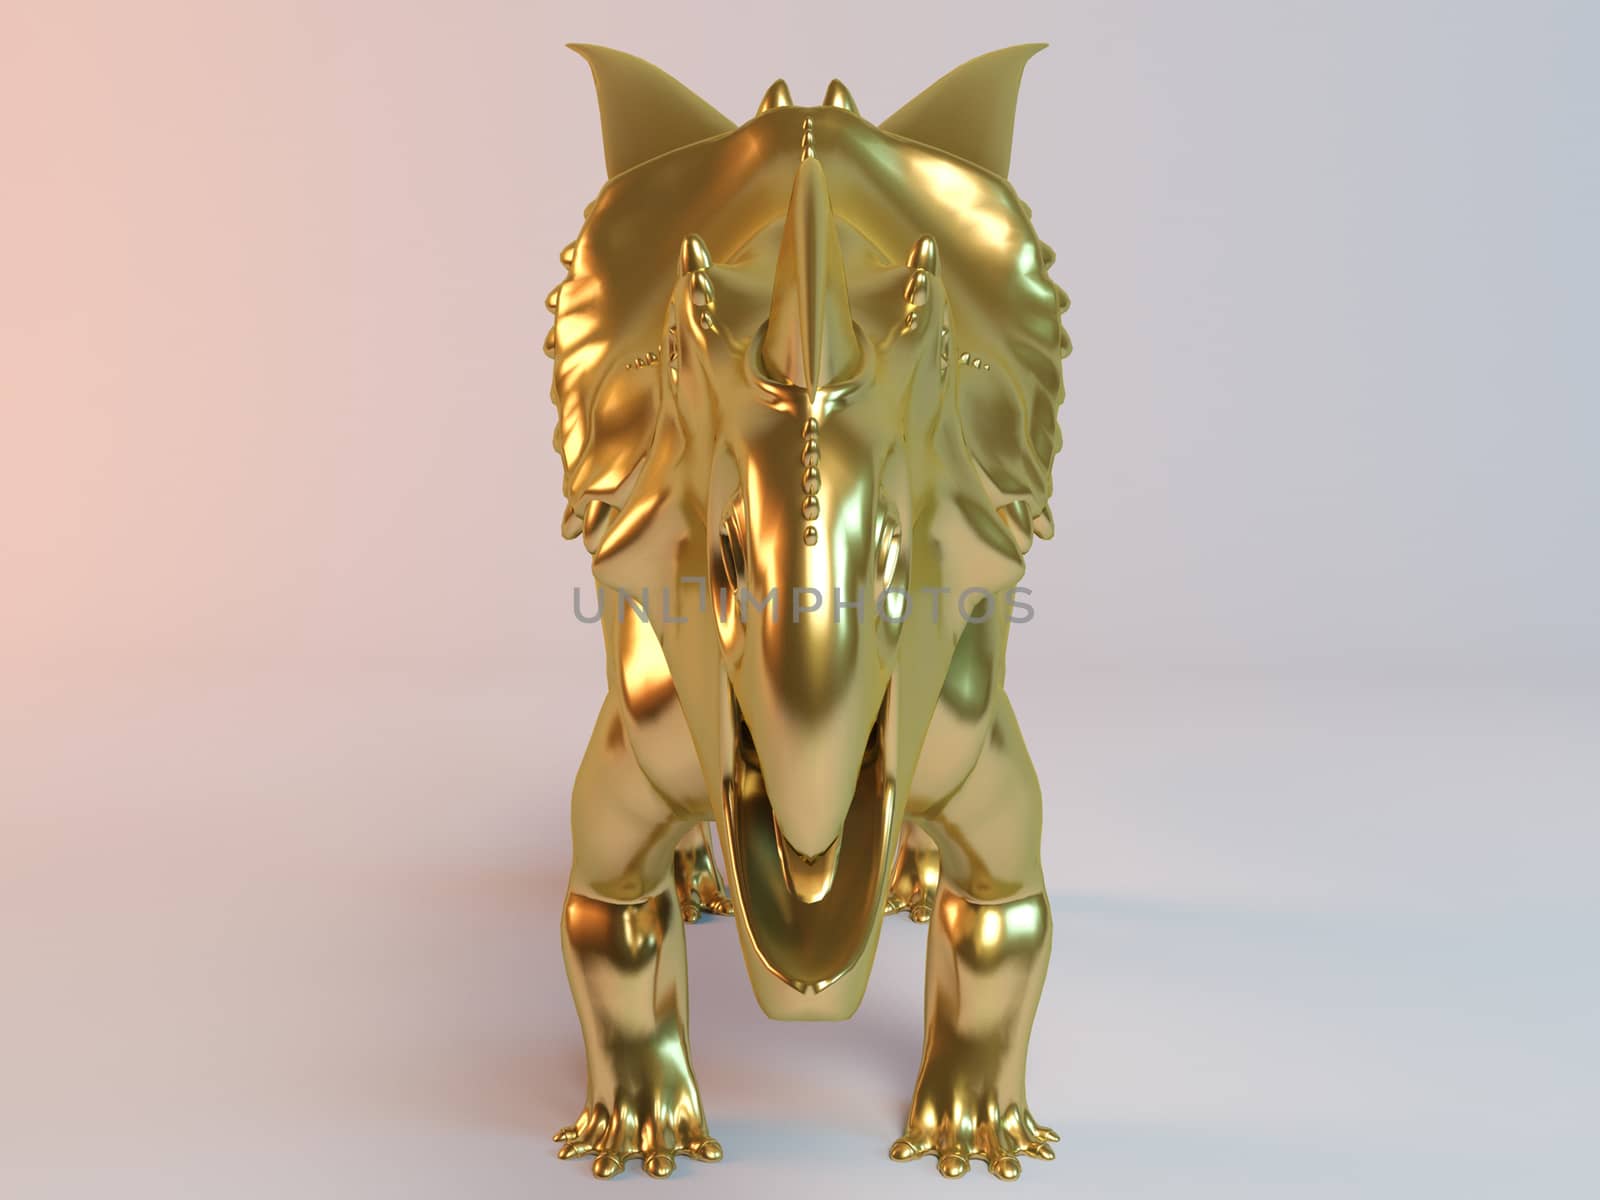 Golden Einiosaurus 3D model by fares139